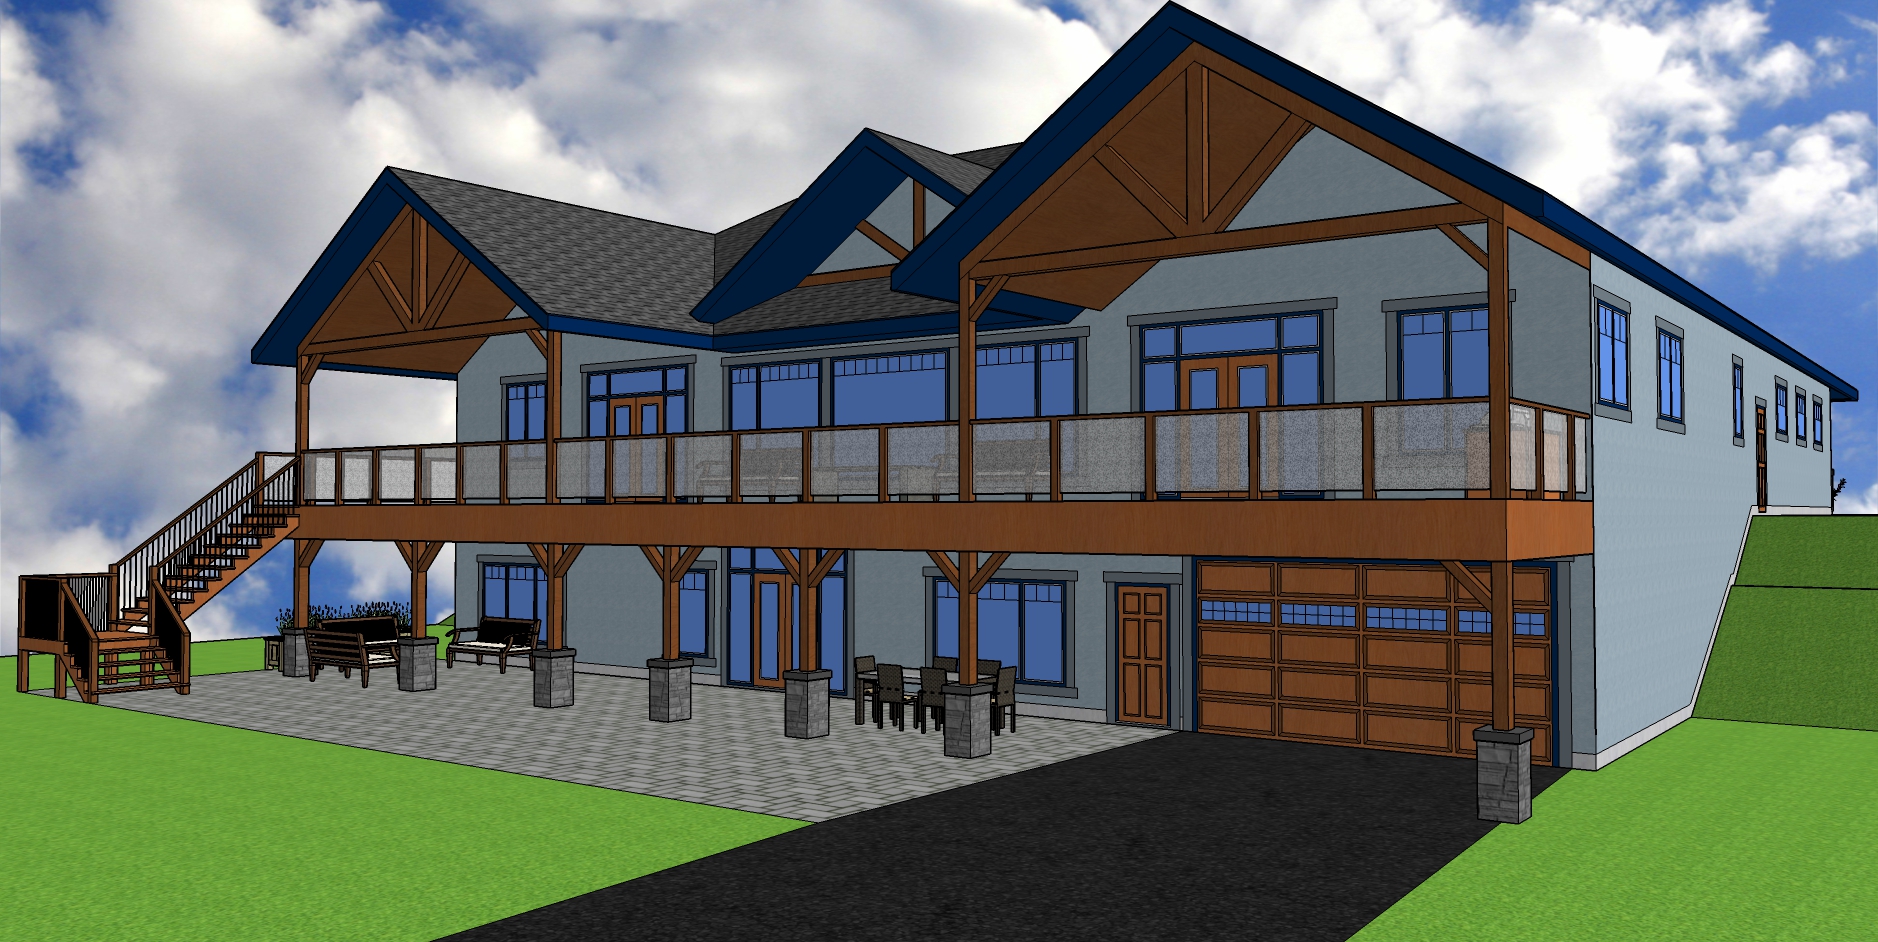 Acreage Bungalow with open ceilings. | Edmonton Aurora Home Design Plan